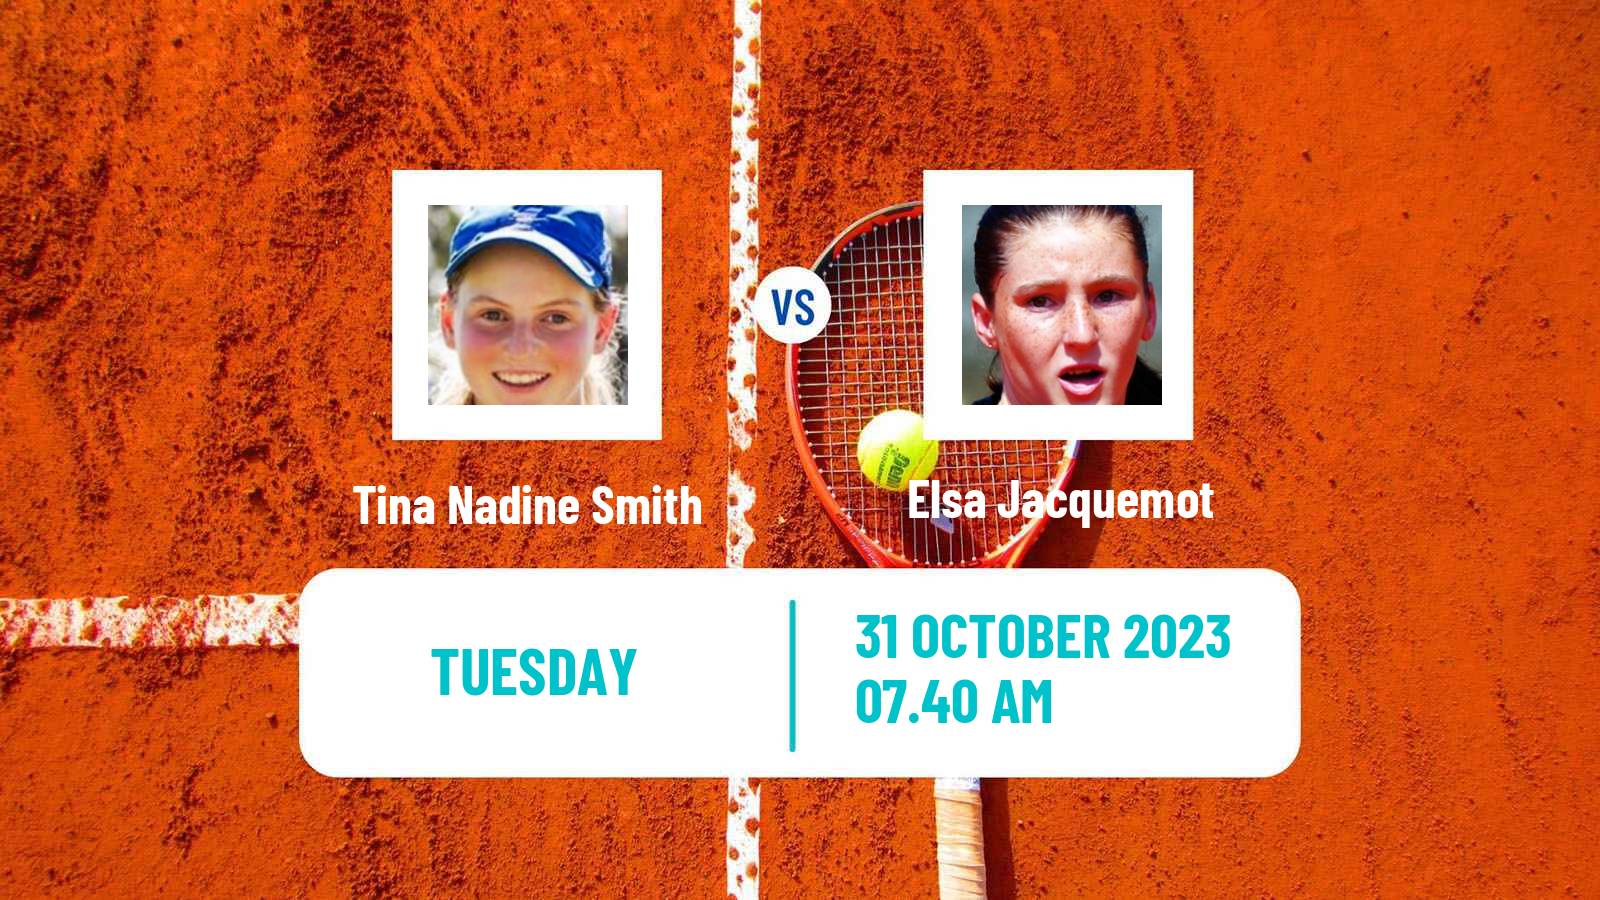 Tennis ITF W60 Nantes Women Tina Nadine Smith - Elsa Jacquemot